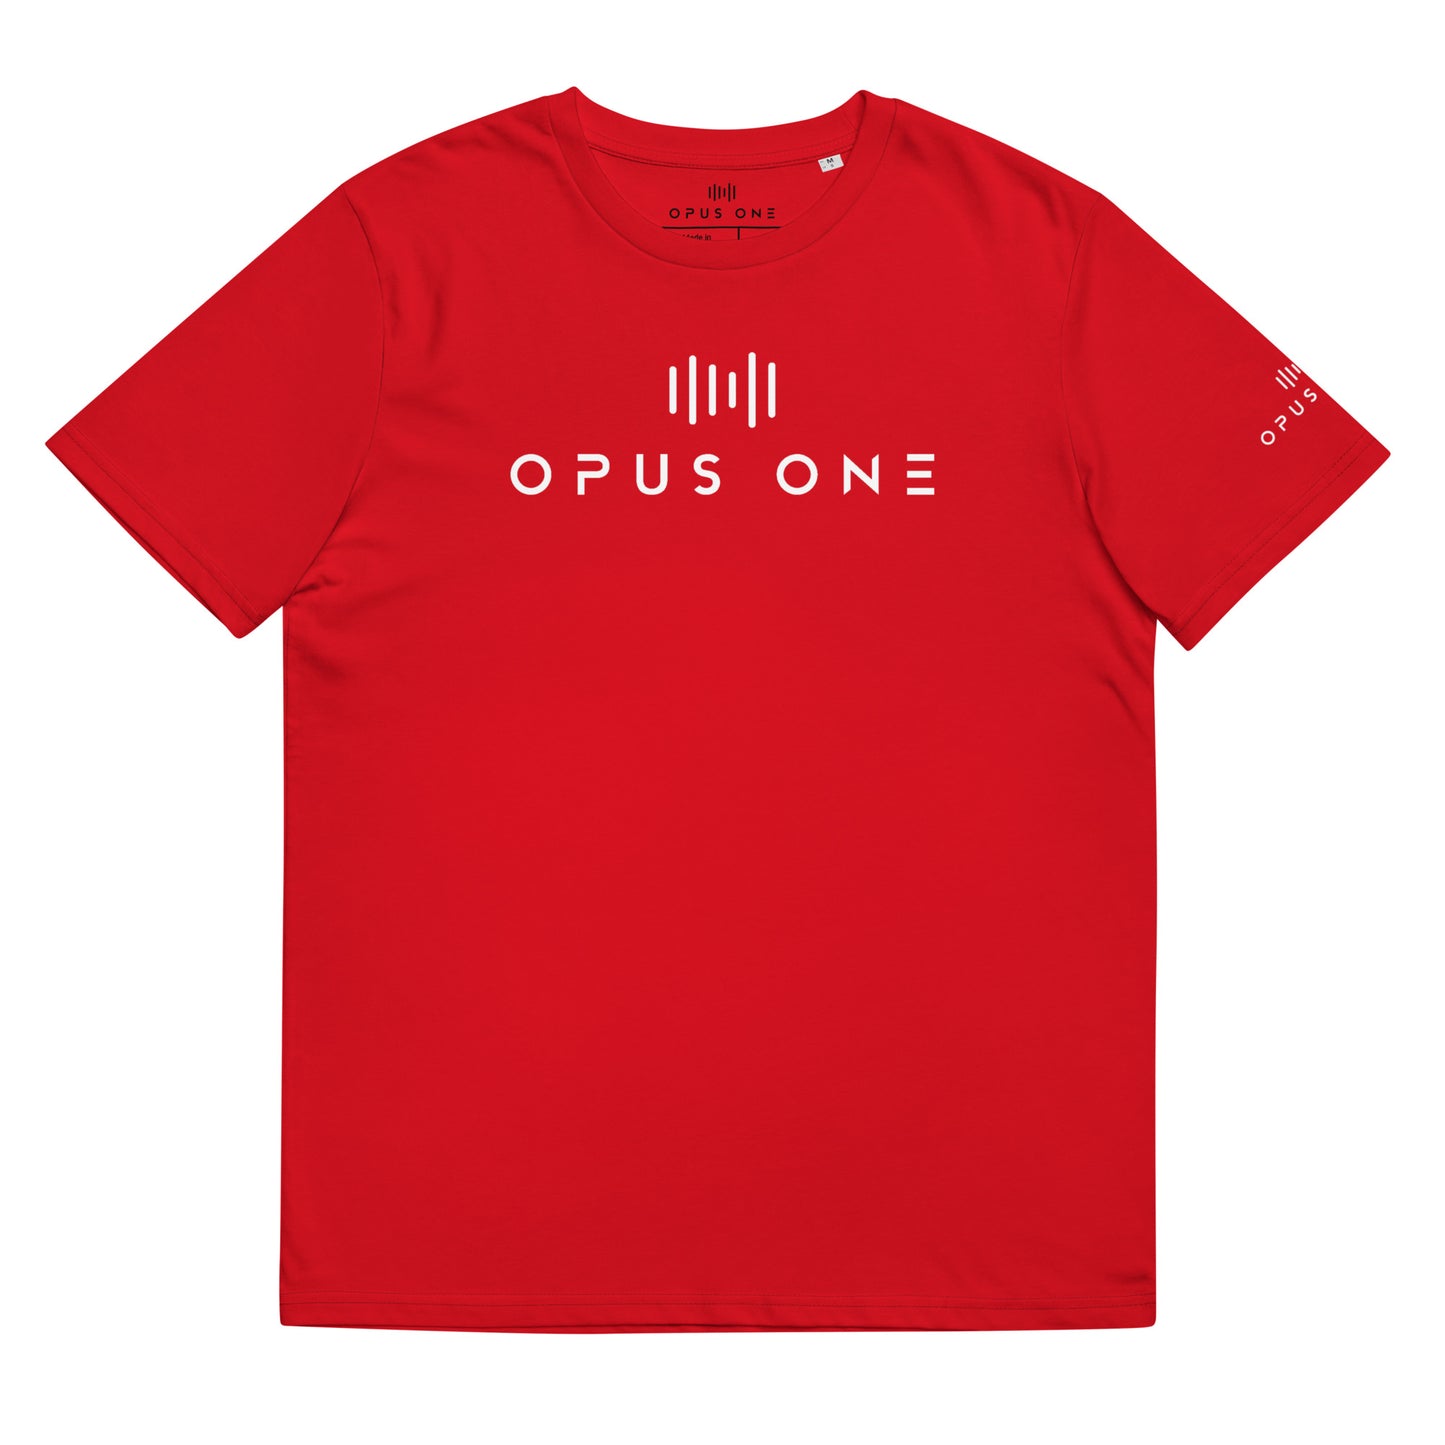 Ltd (Opus One v1) Unisex organic cotton t-shirt (White Text)